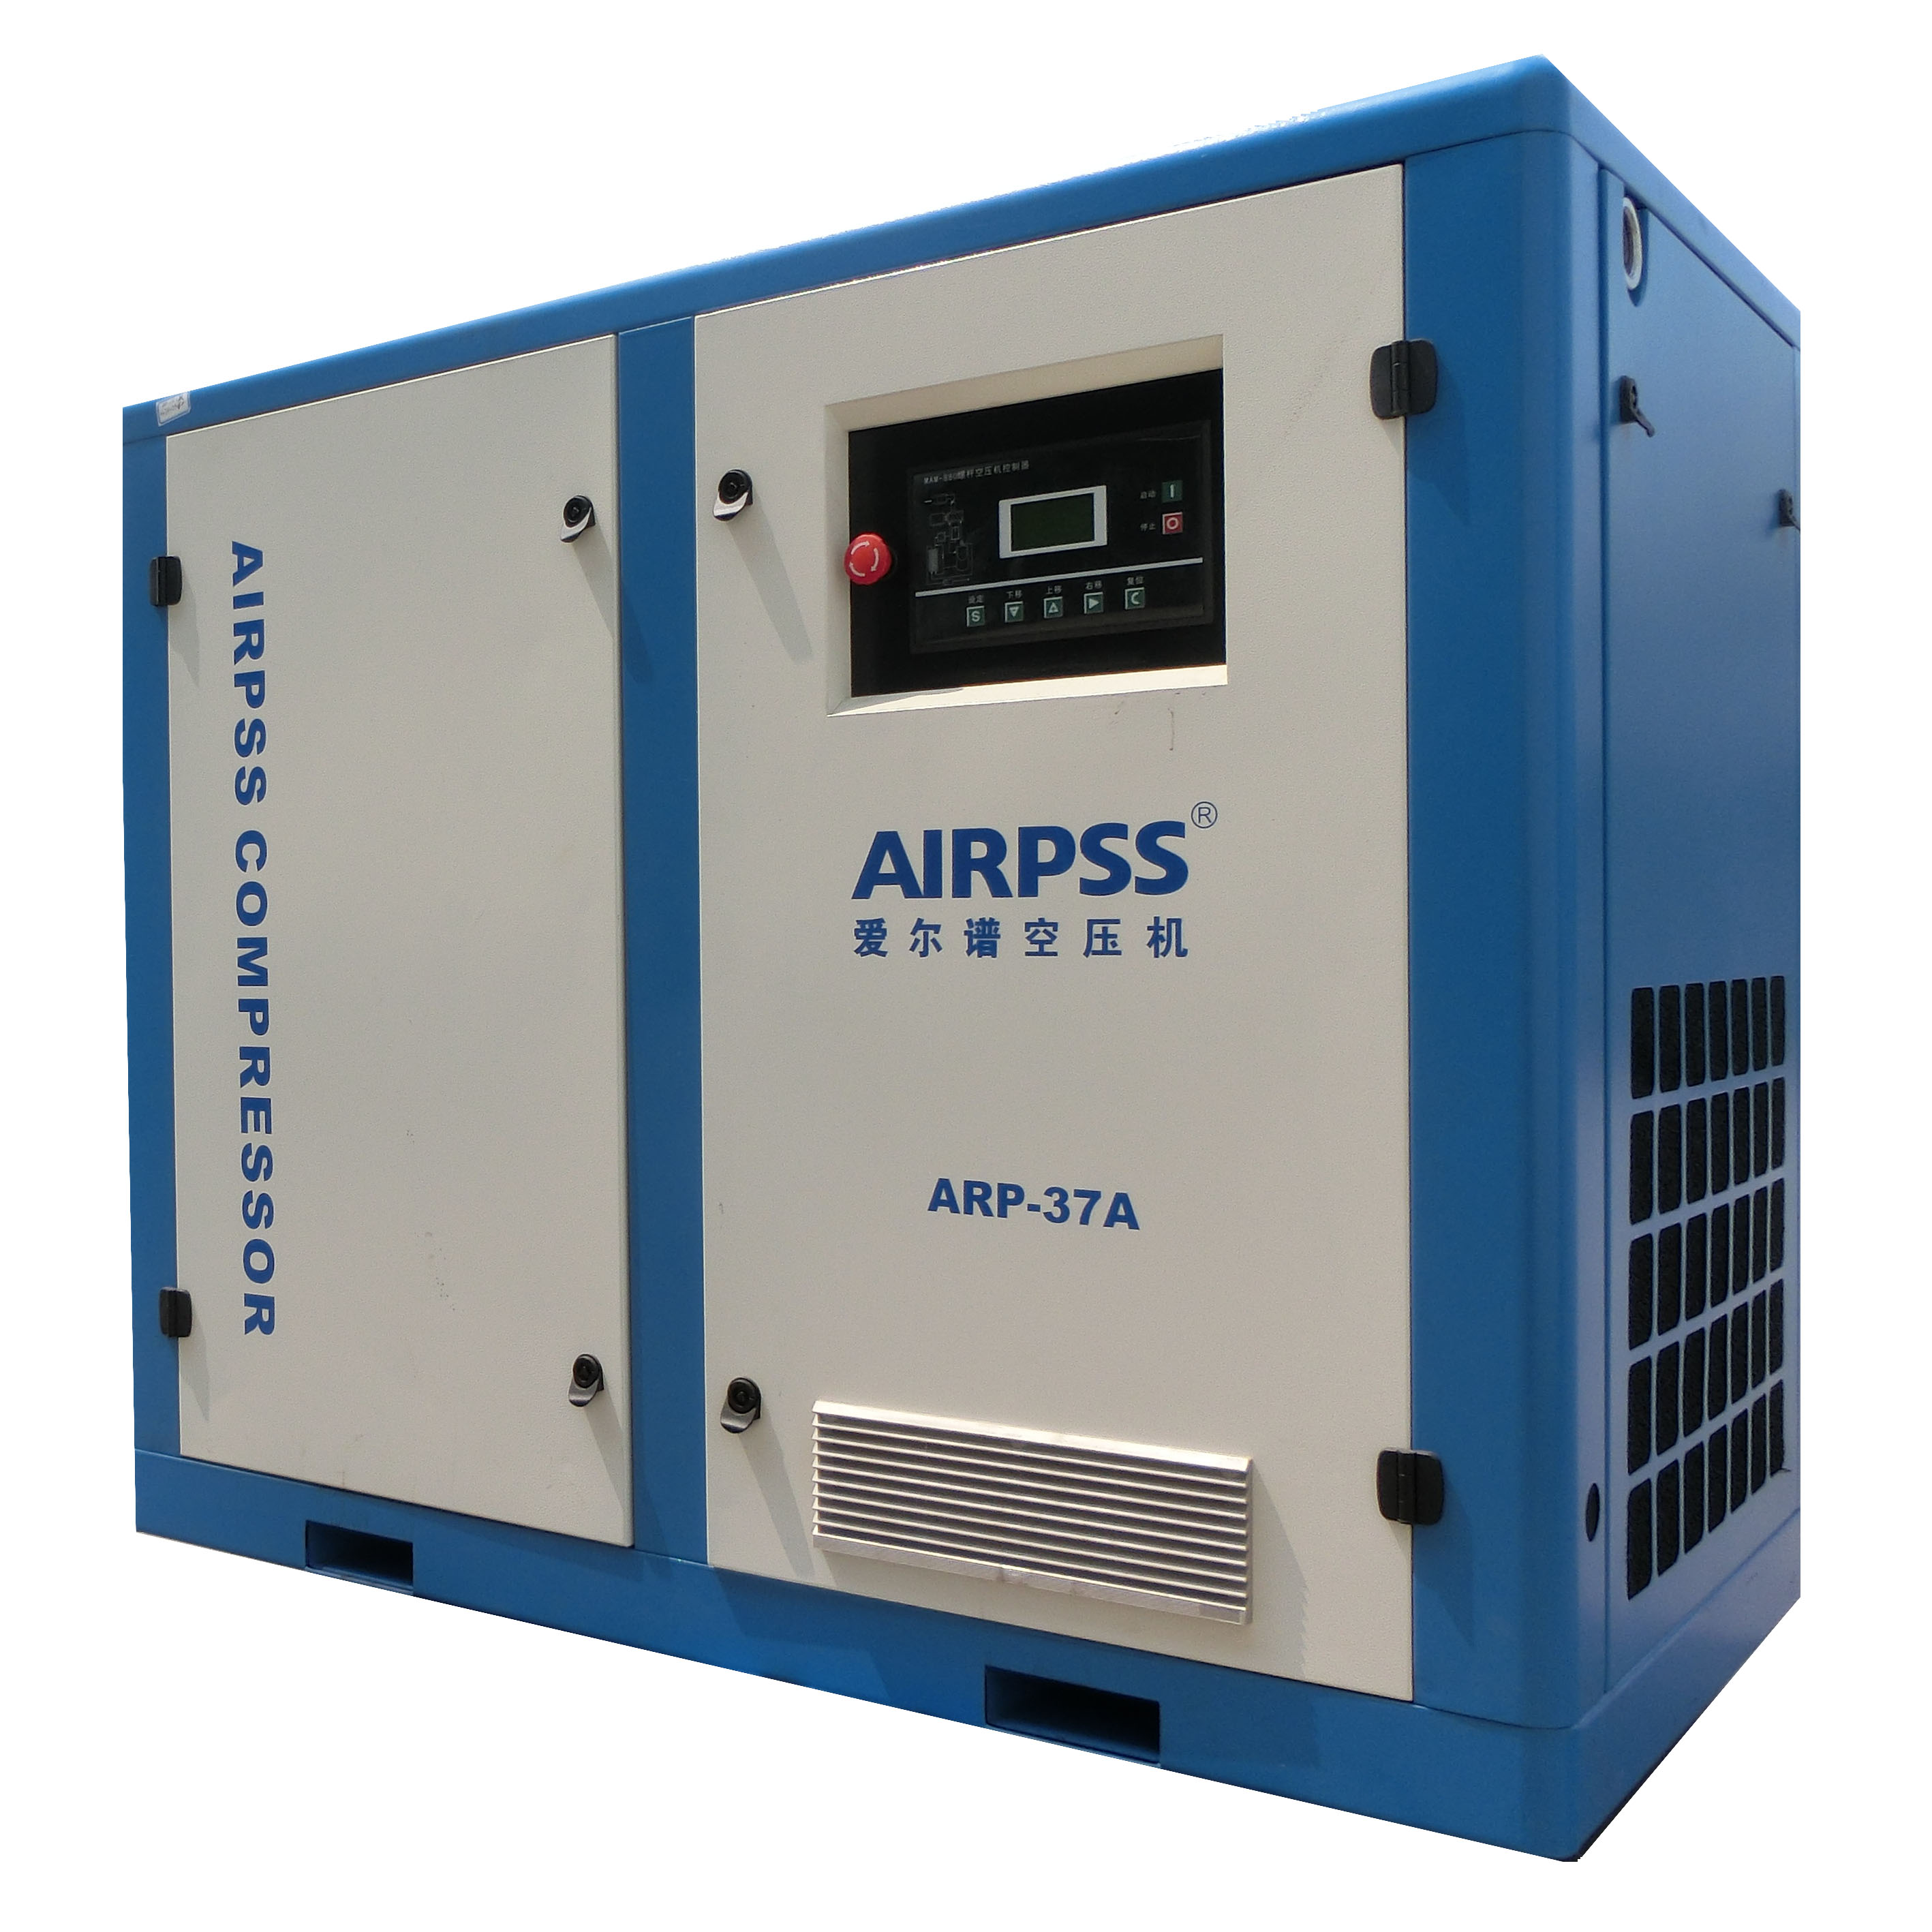 AIRPSS air compressor